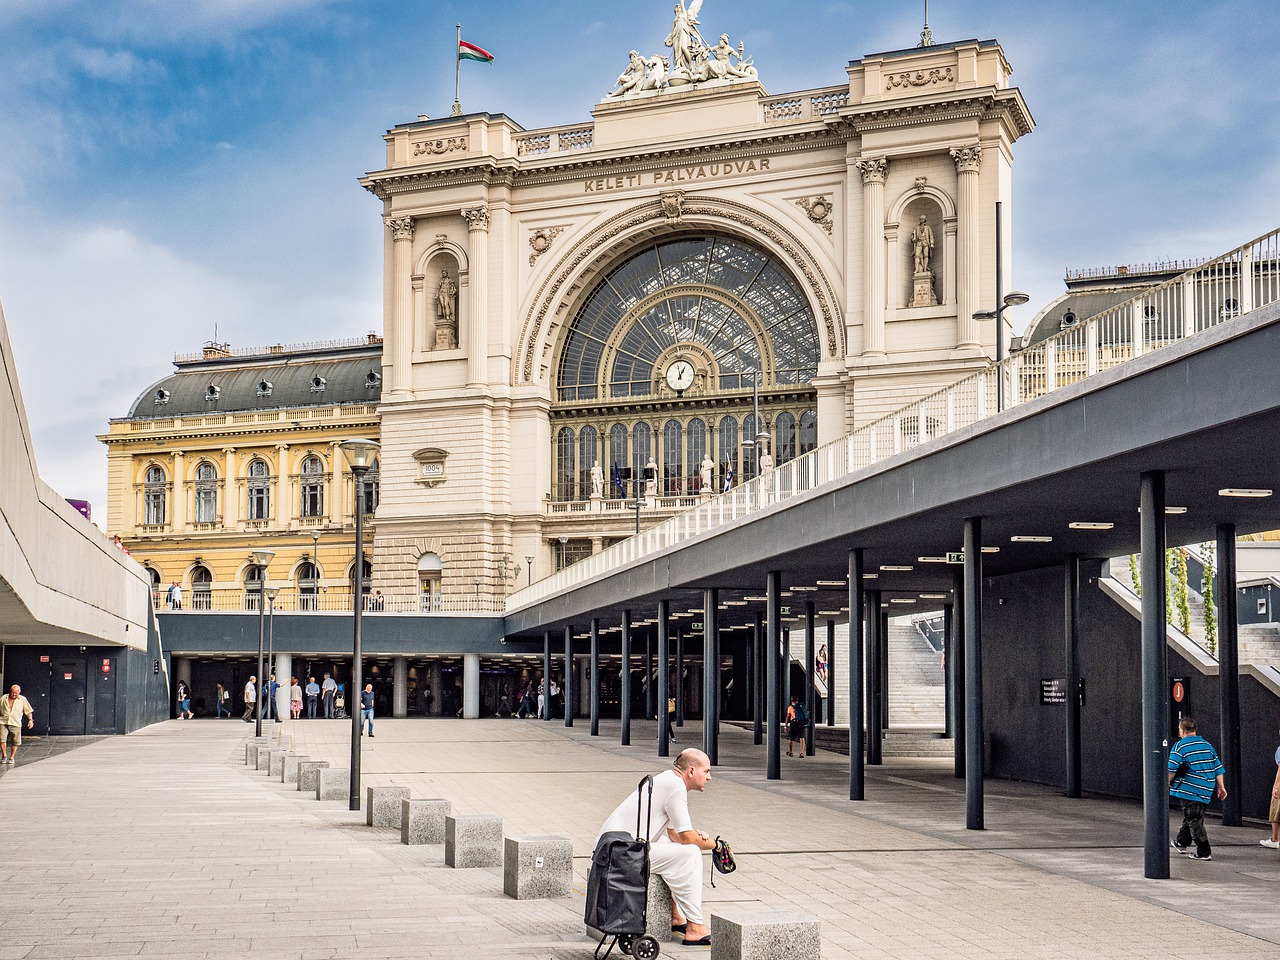 Stazione ferroviaria di Budapest Keleti